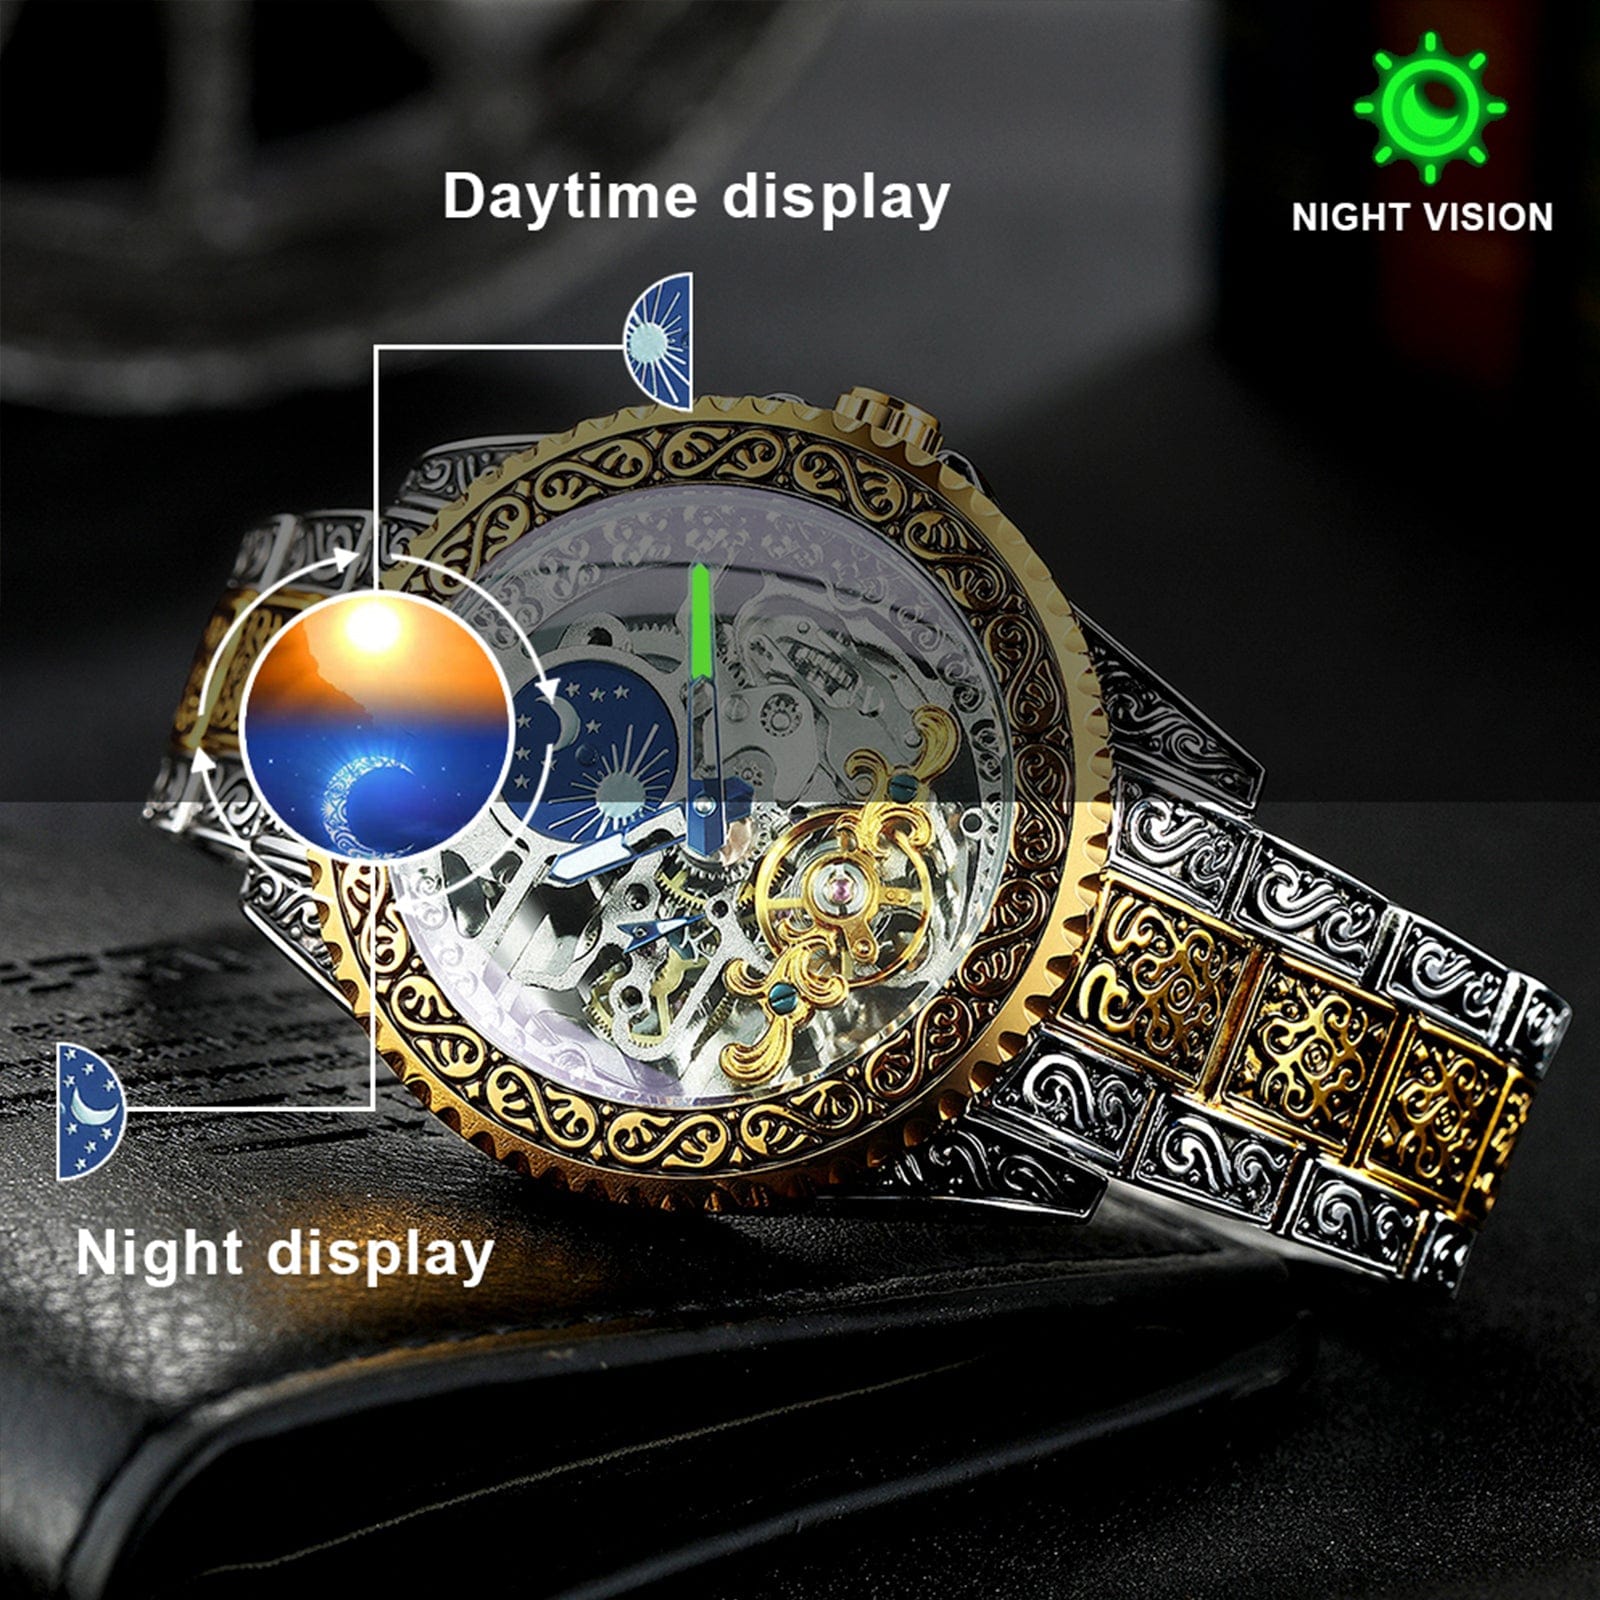 VVS Jewelry hip hop jewelry Gold Luminous Tourbillon Skeleton Mechanical Watch